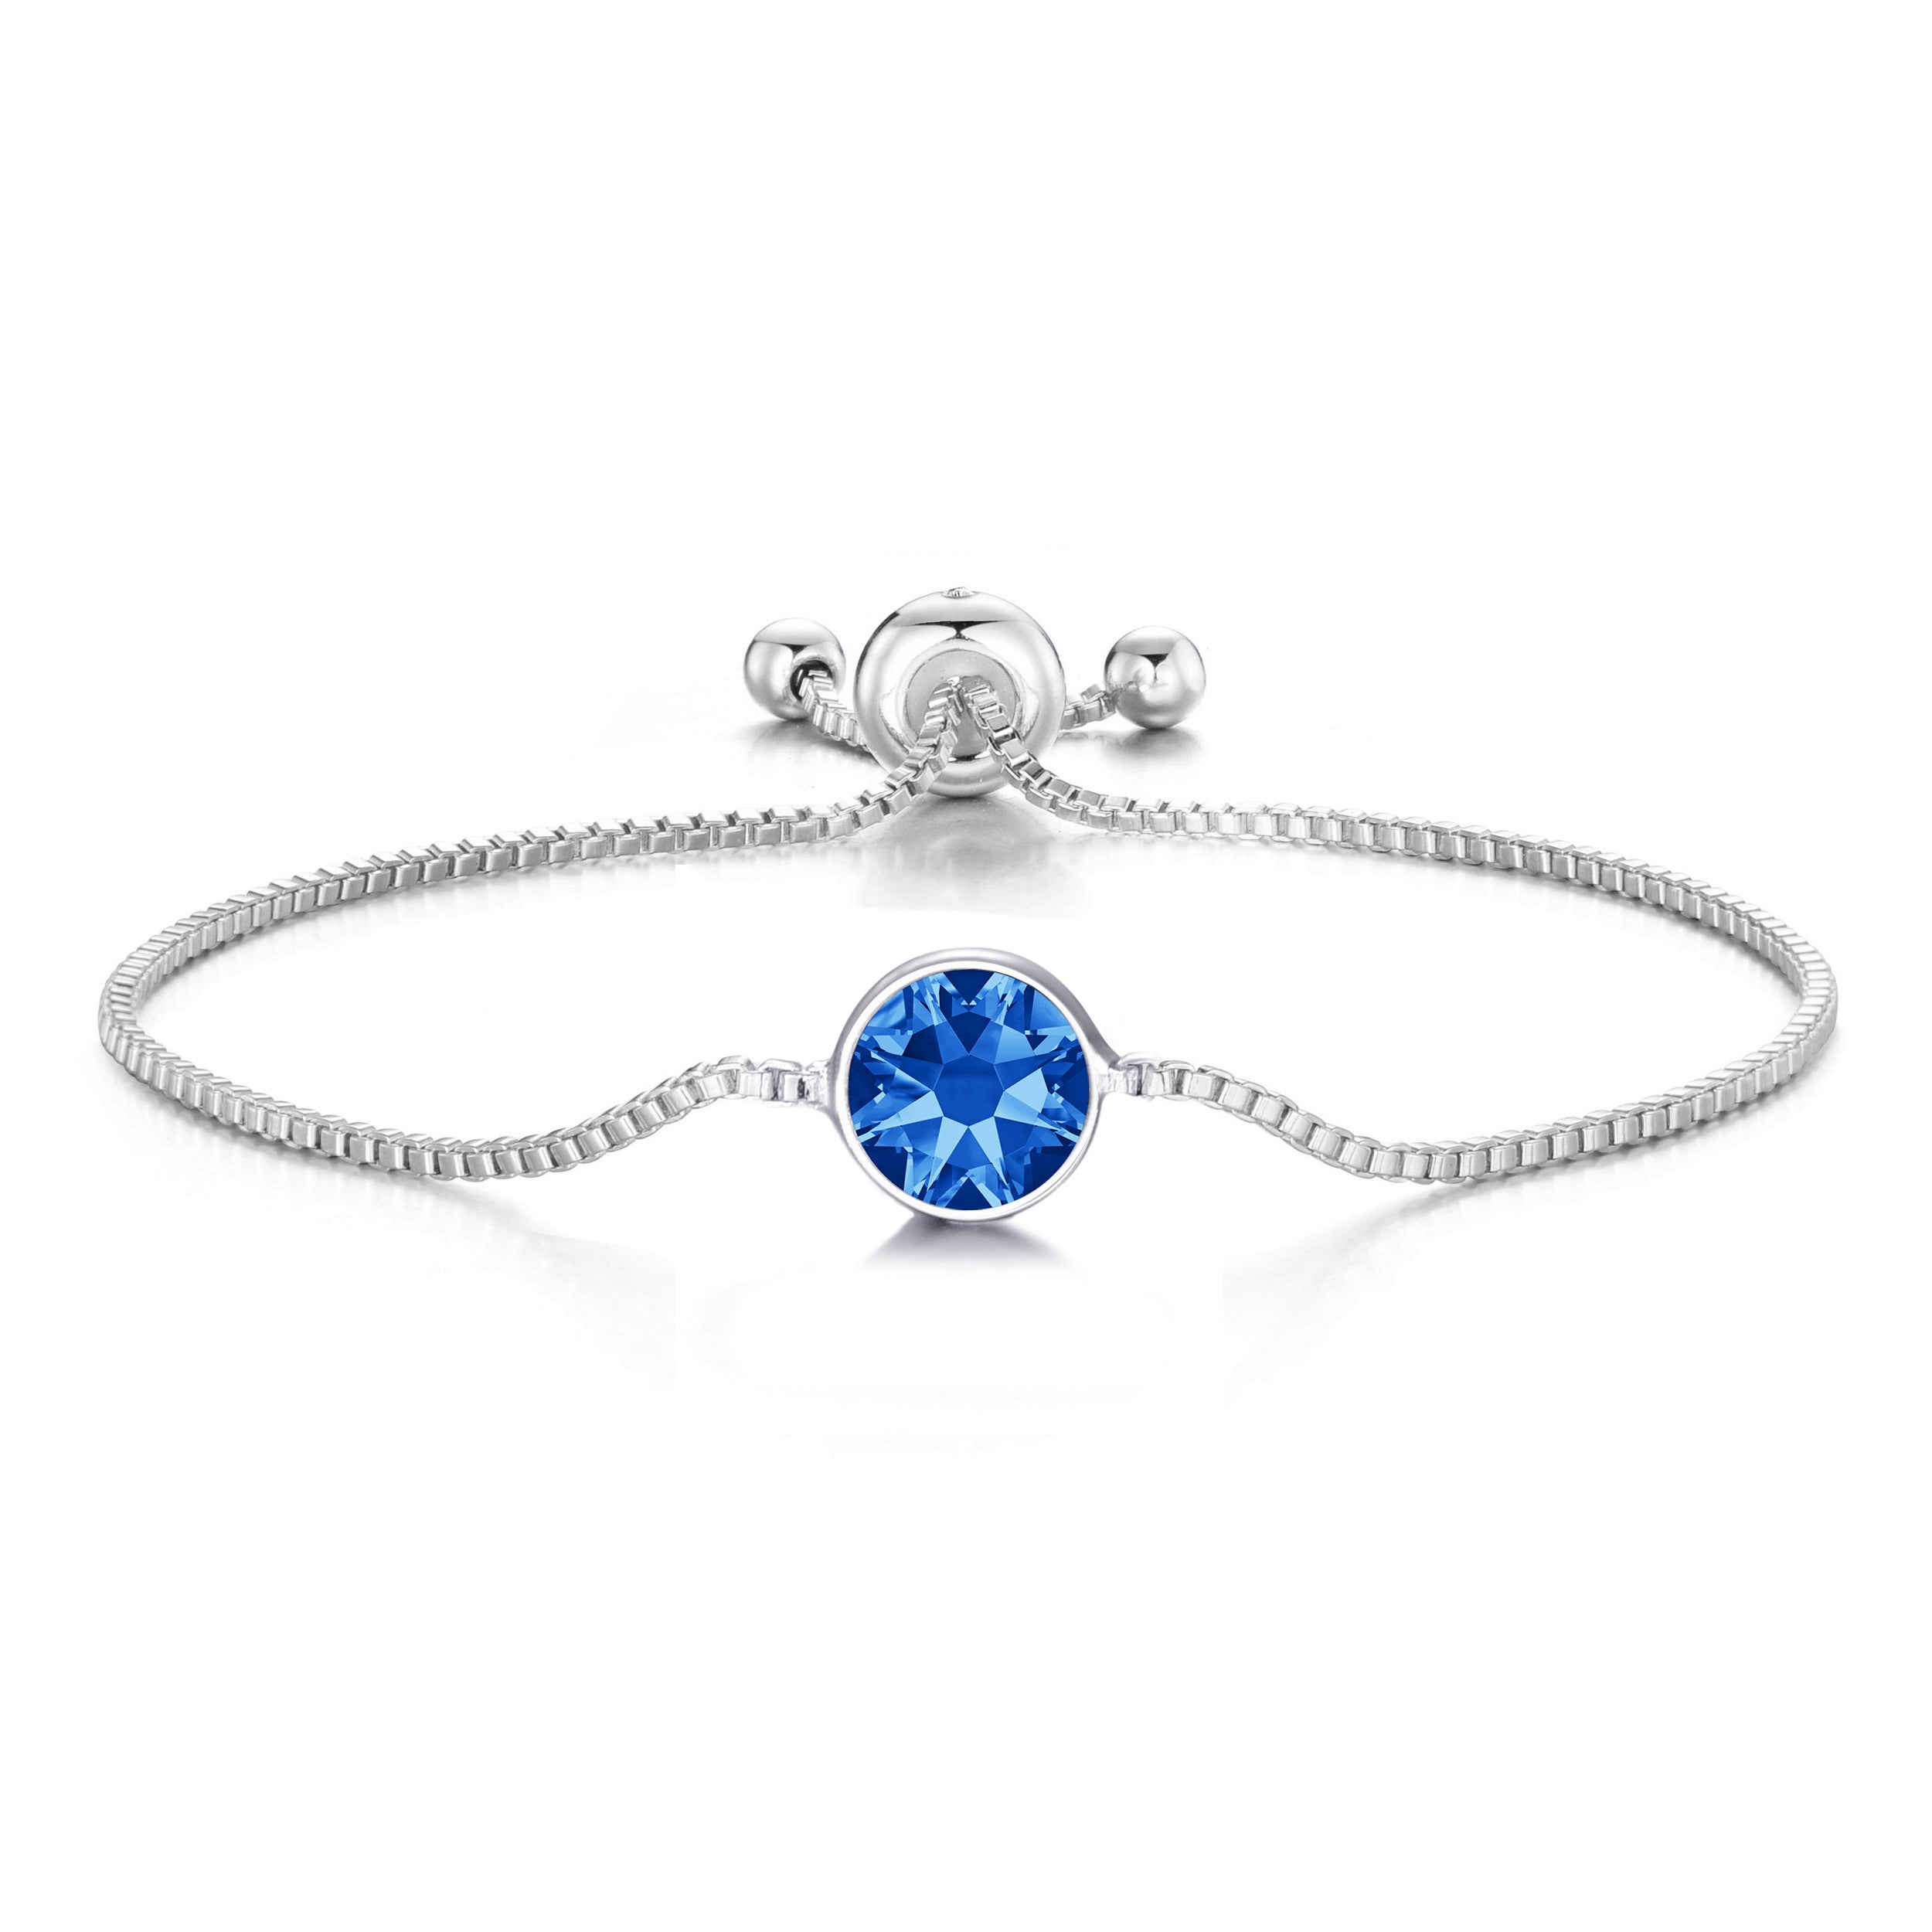 Dark Blue Crystal Bracelet Created with Zircondia® Crystals by Philip Jones Jewellery